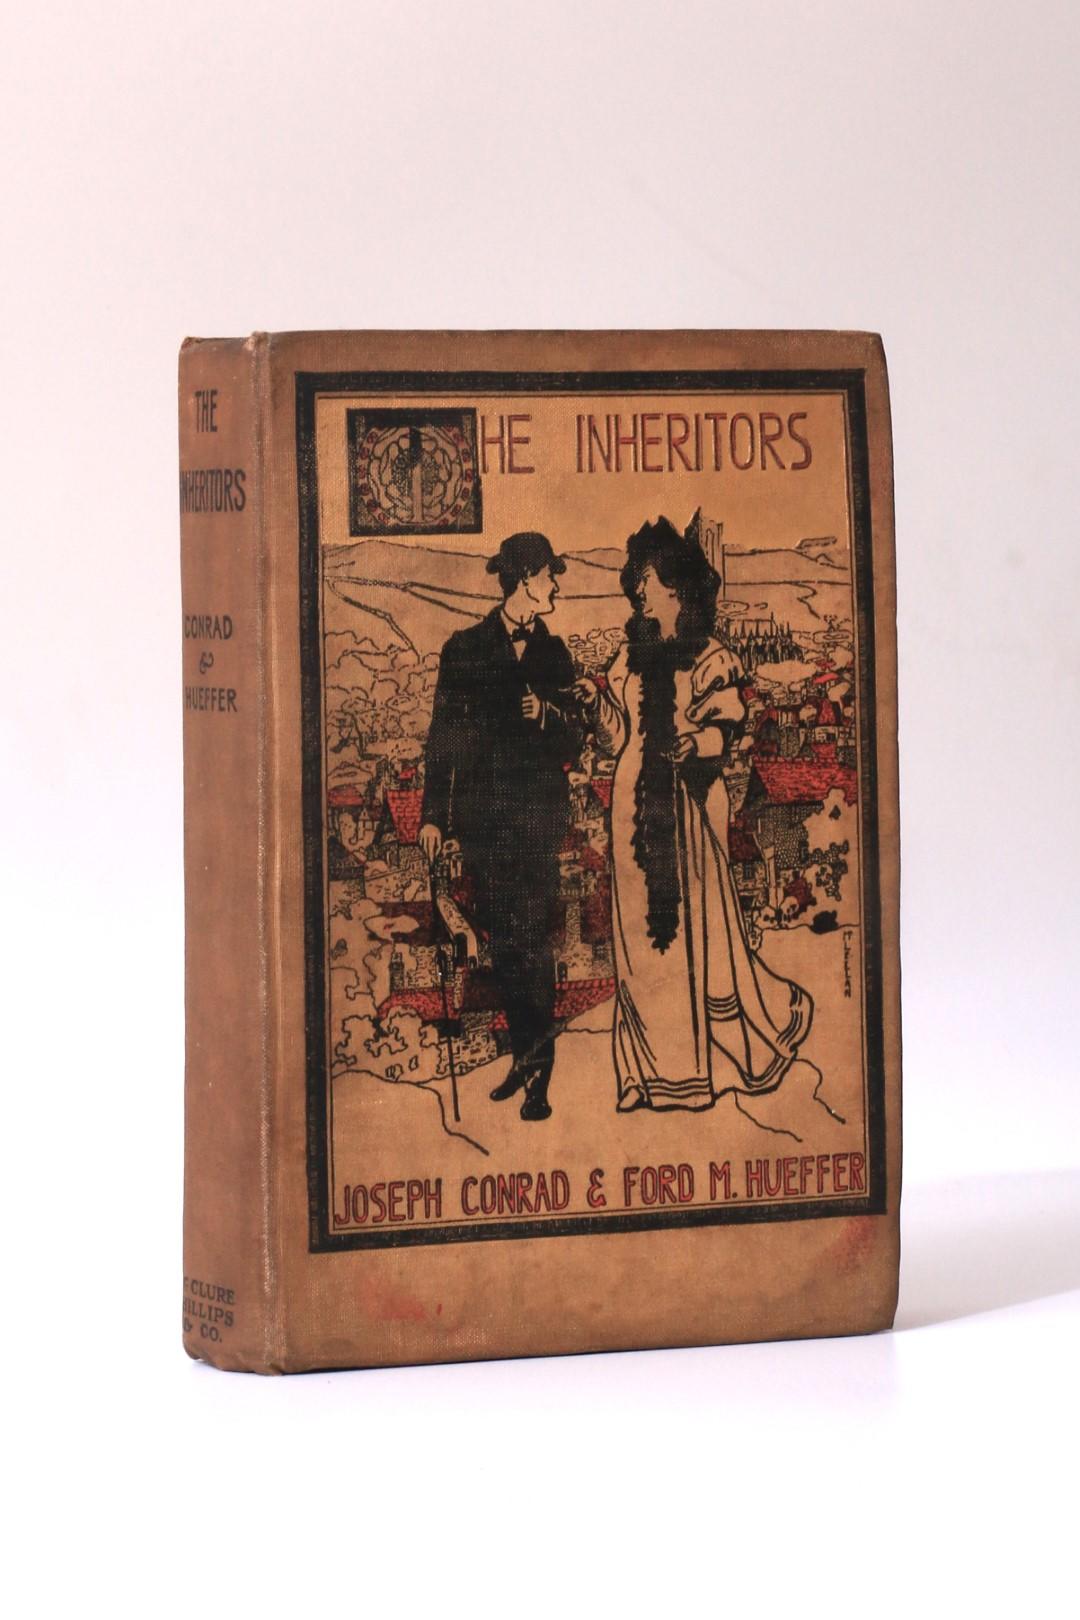 Joseph Conrad & Ford M. Heuffer - The Inheritors - Heinemann, 1901, First Edition.